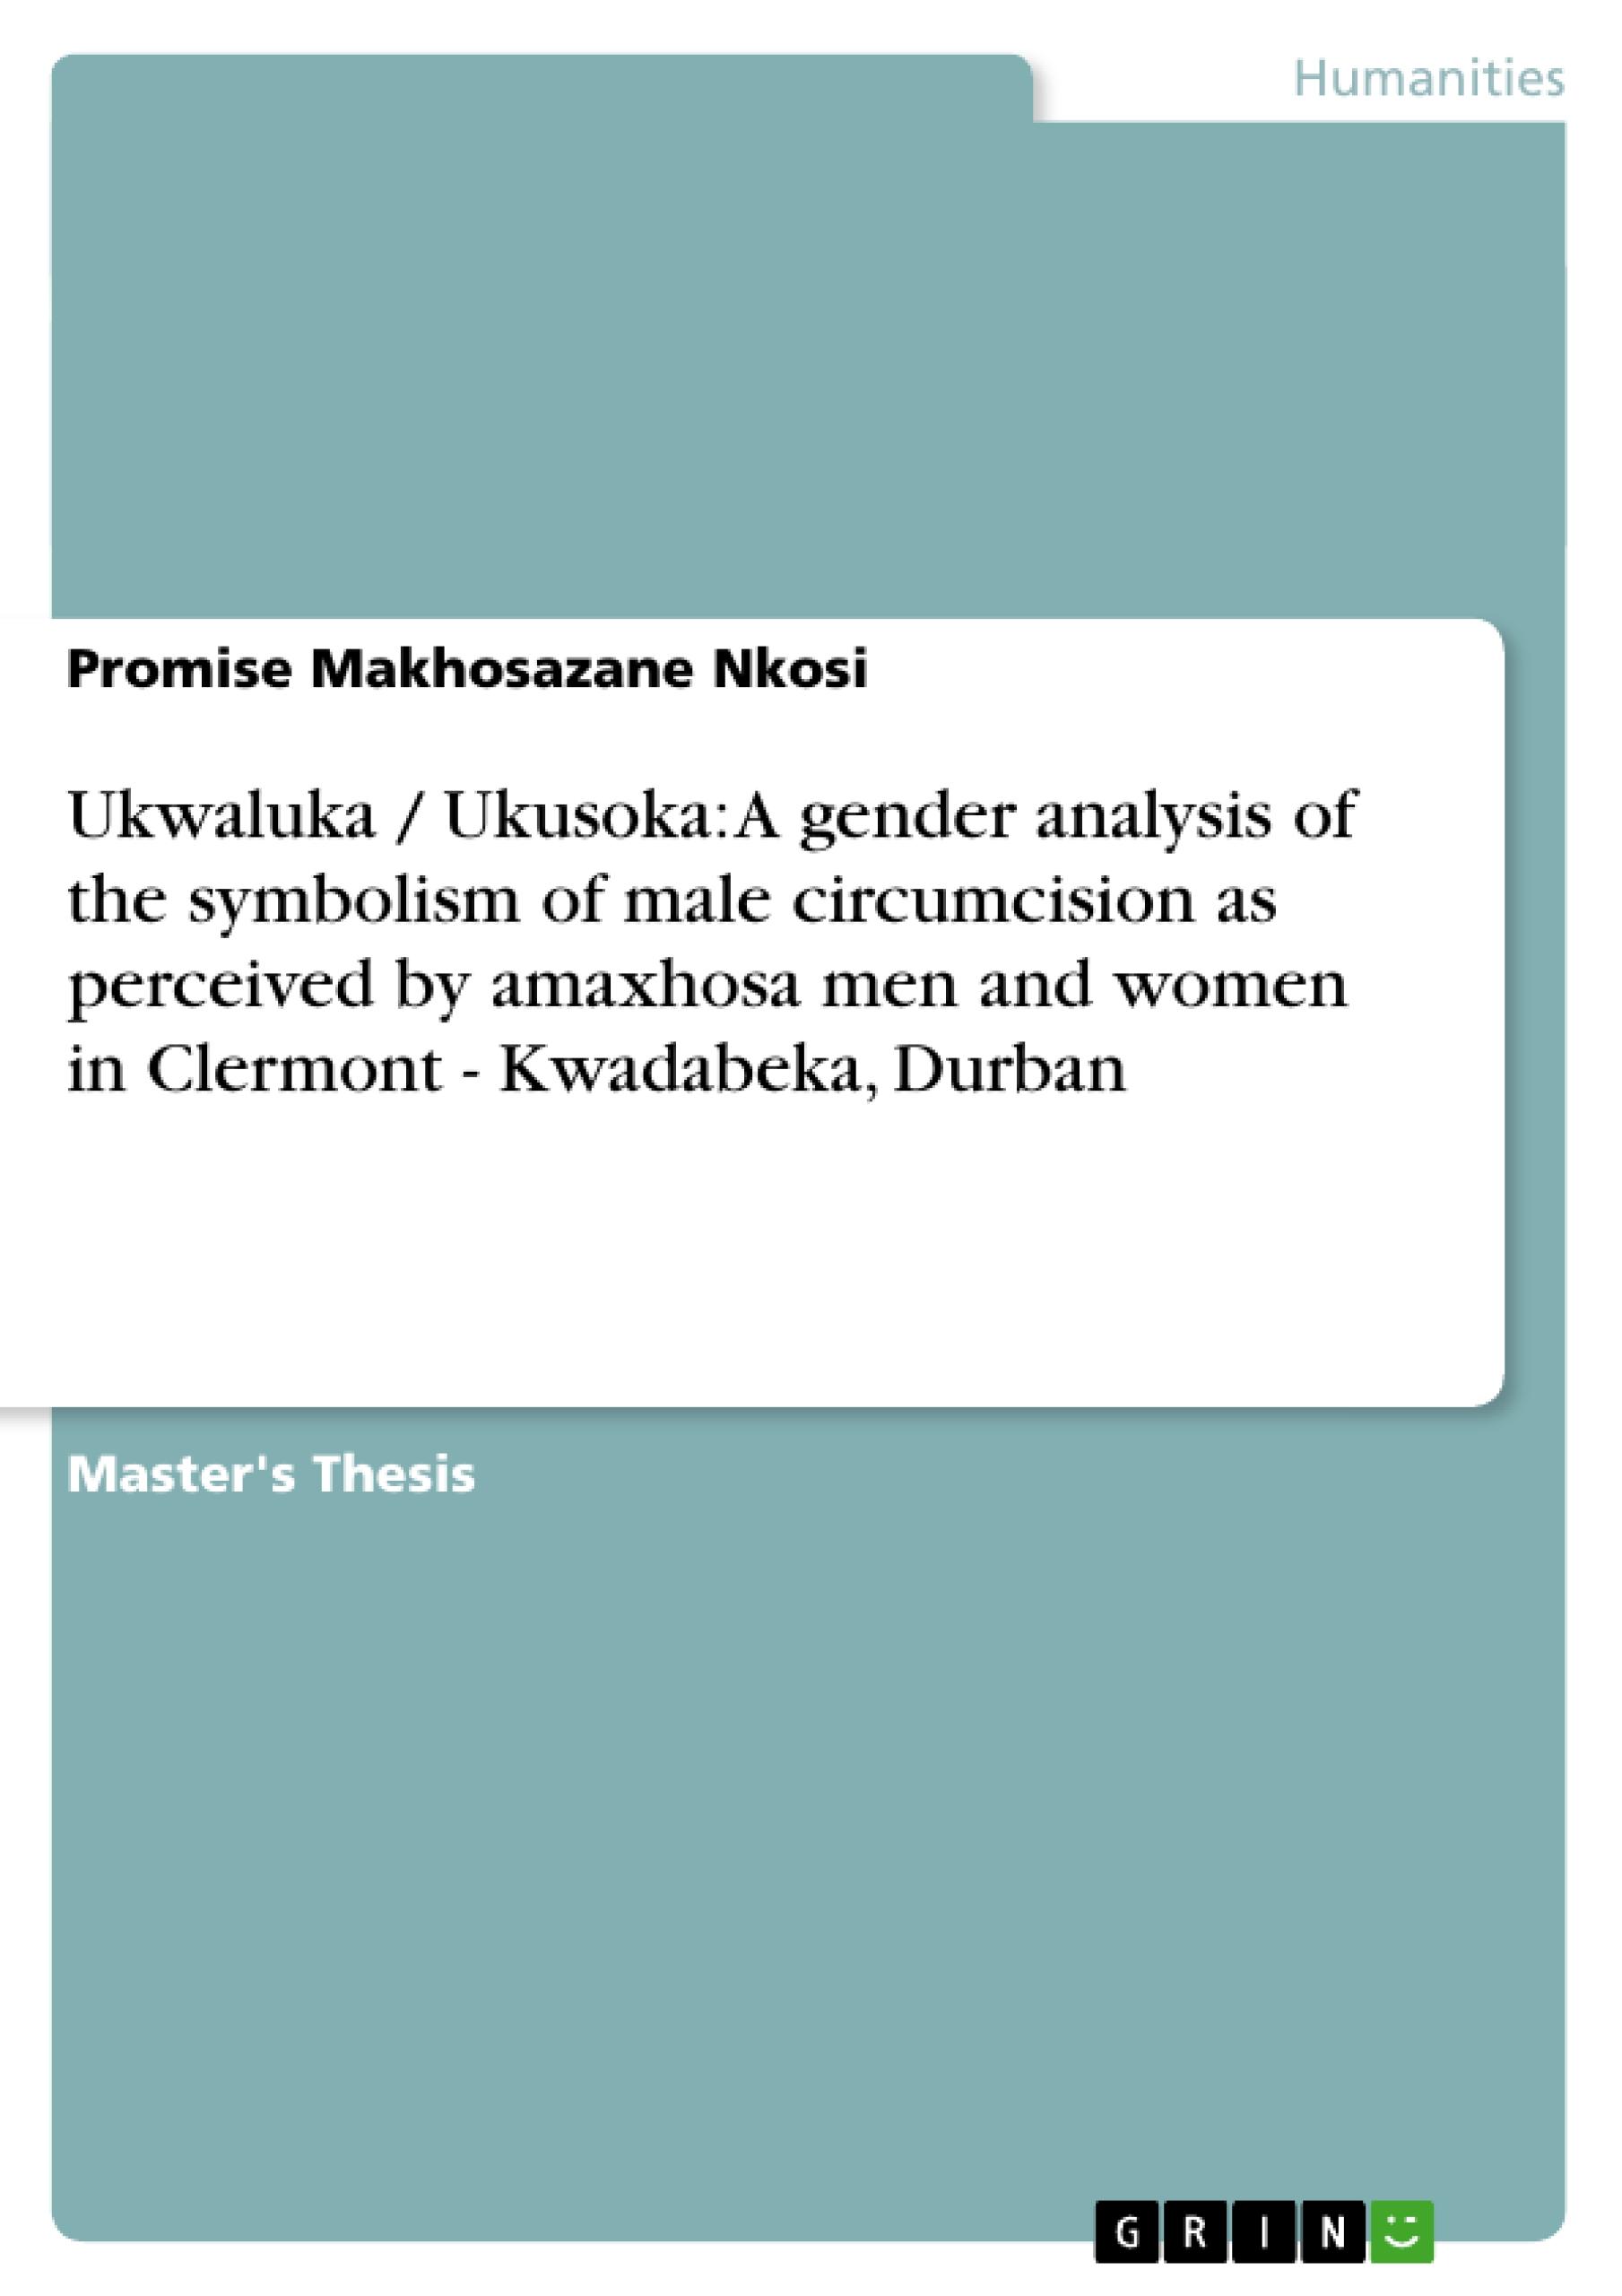 Ukwaluka / Ukusoka: A gender analysis of the symbolism of male circumcision as perceived by amaxhosa men and women in Clermont - Kwadabeka, Durban - Nkosi, Promise Makhosazane